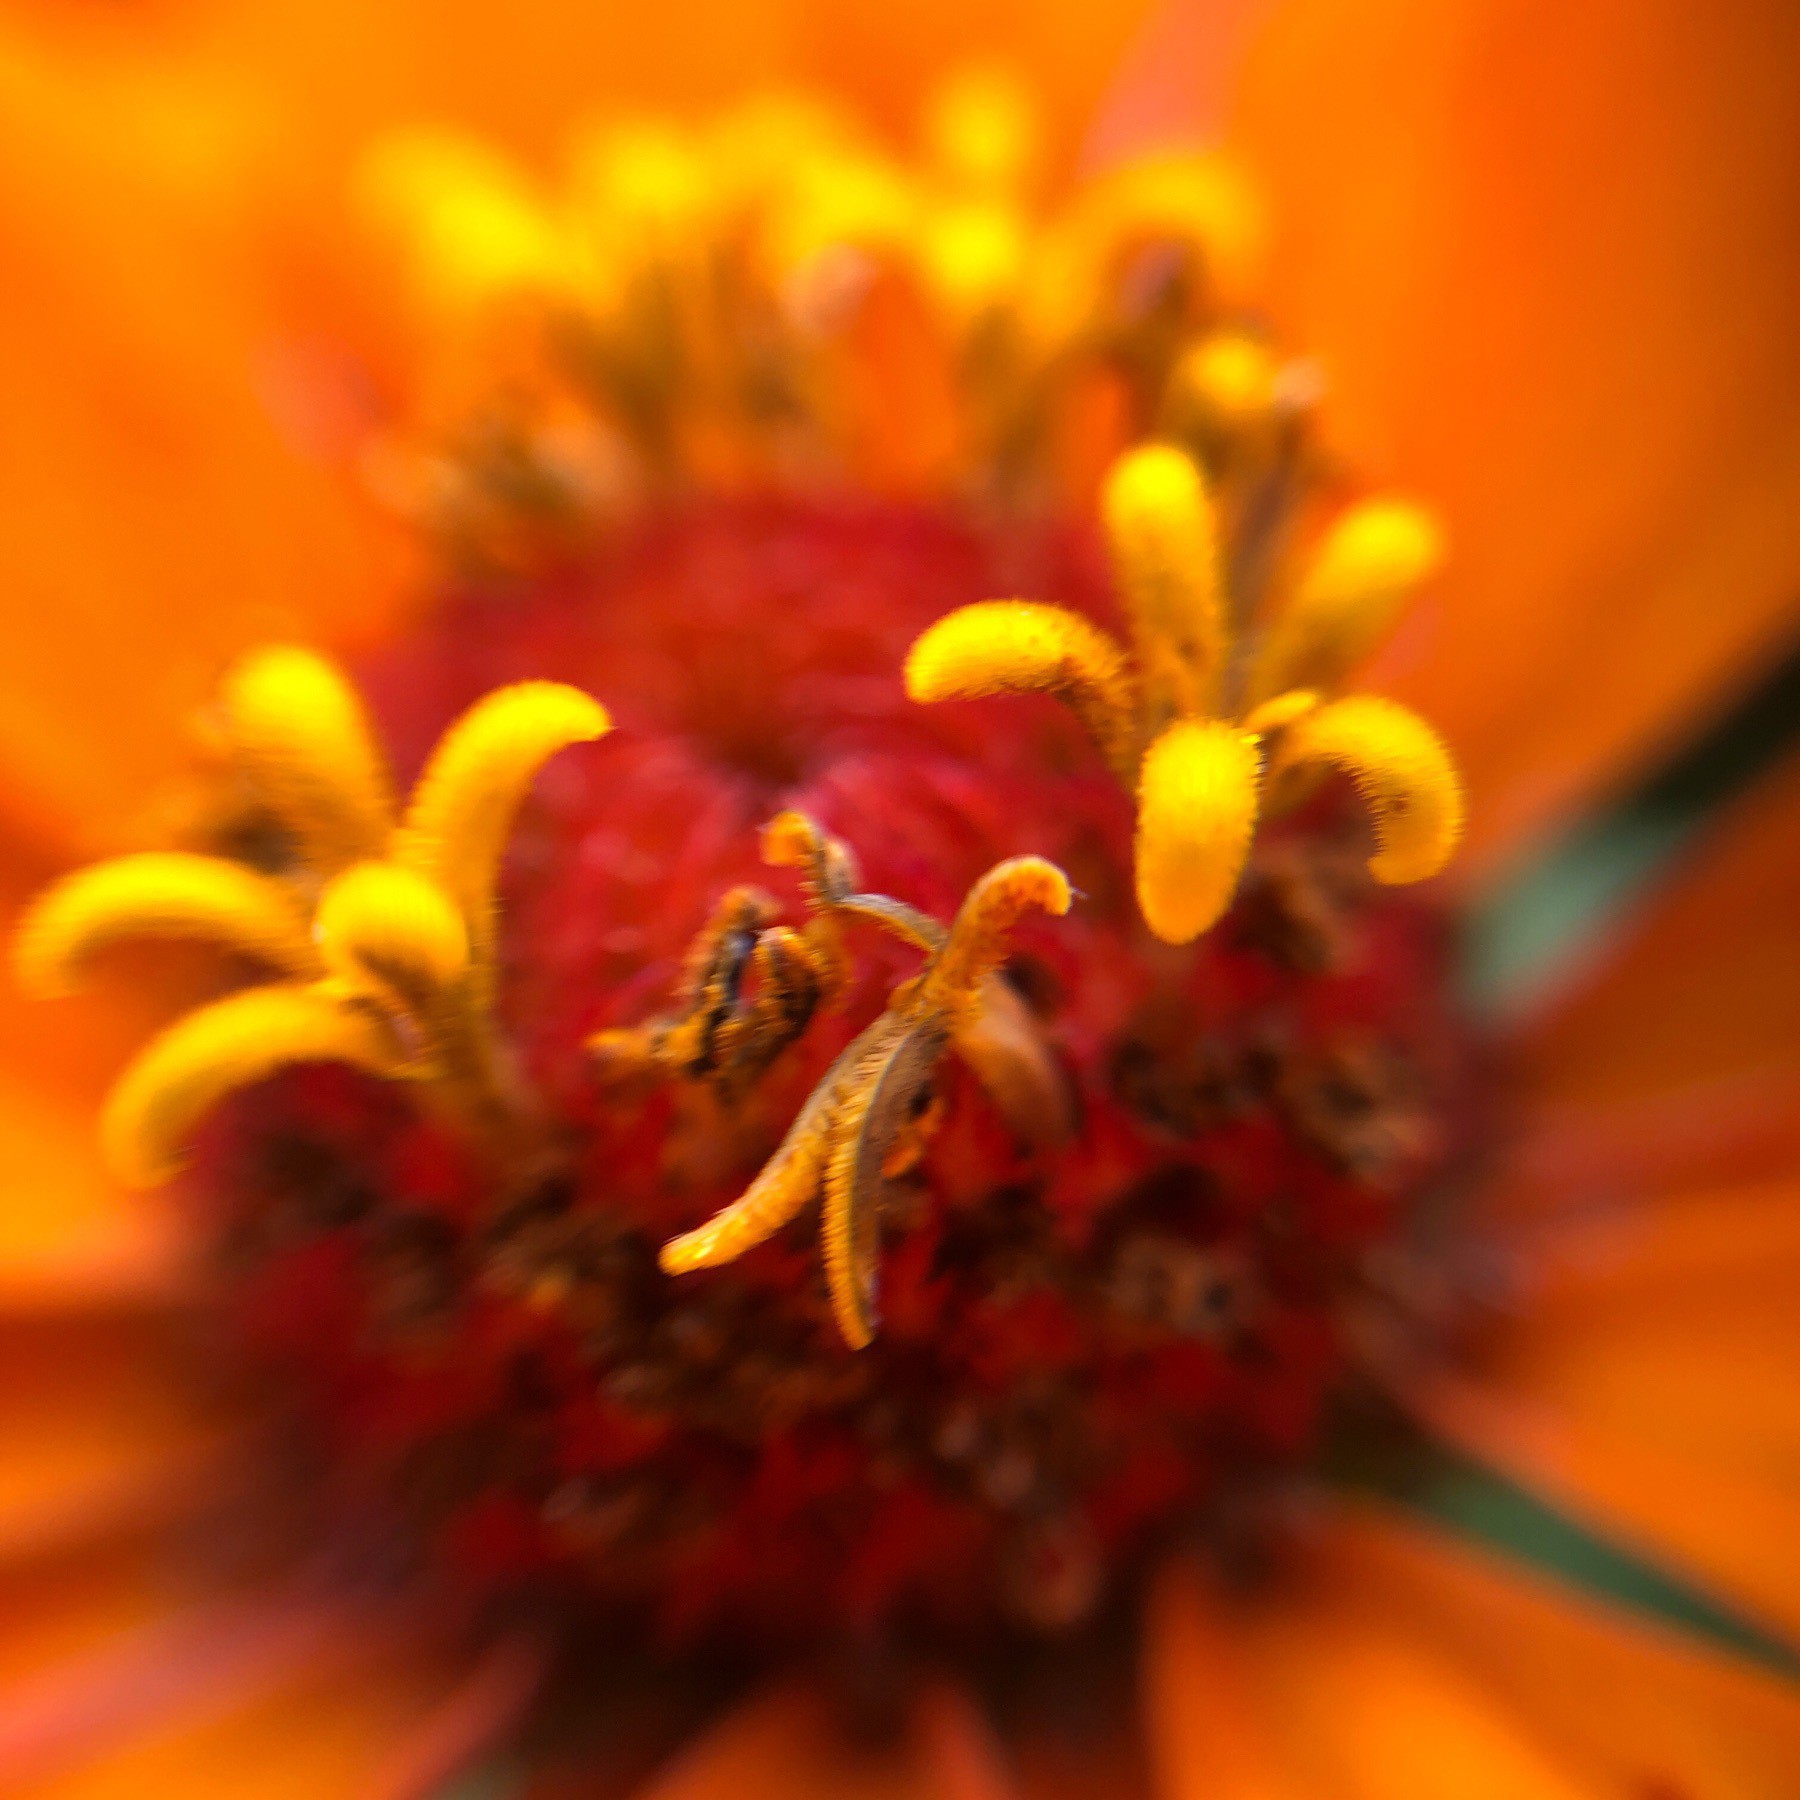 Centre of orange flower.